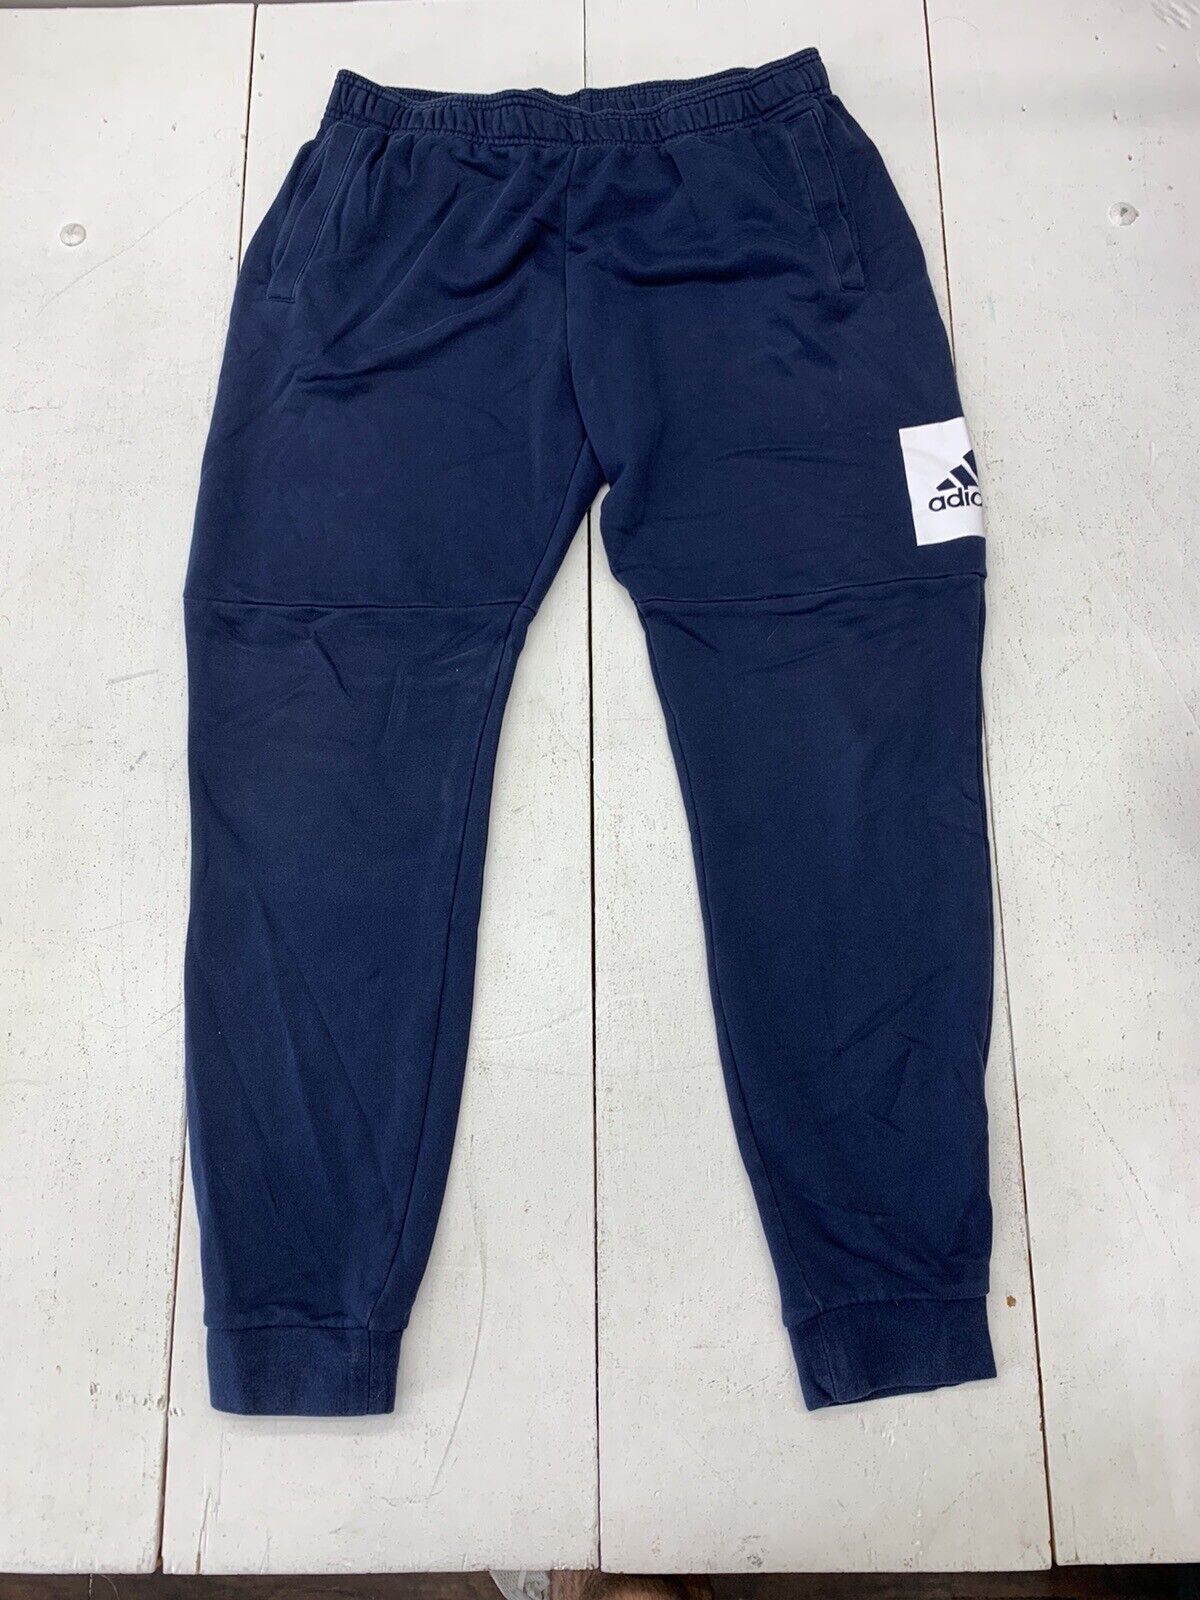 Adidas Mens Dark Blue Sweat Pants Size XL